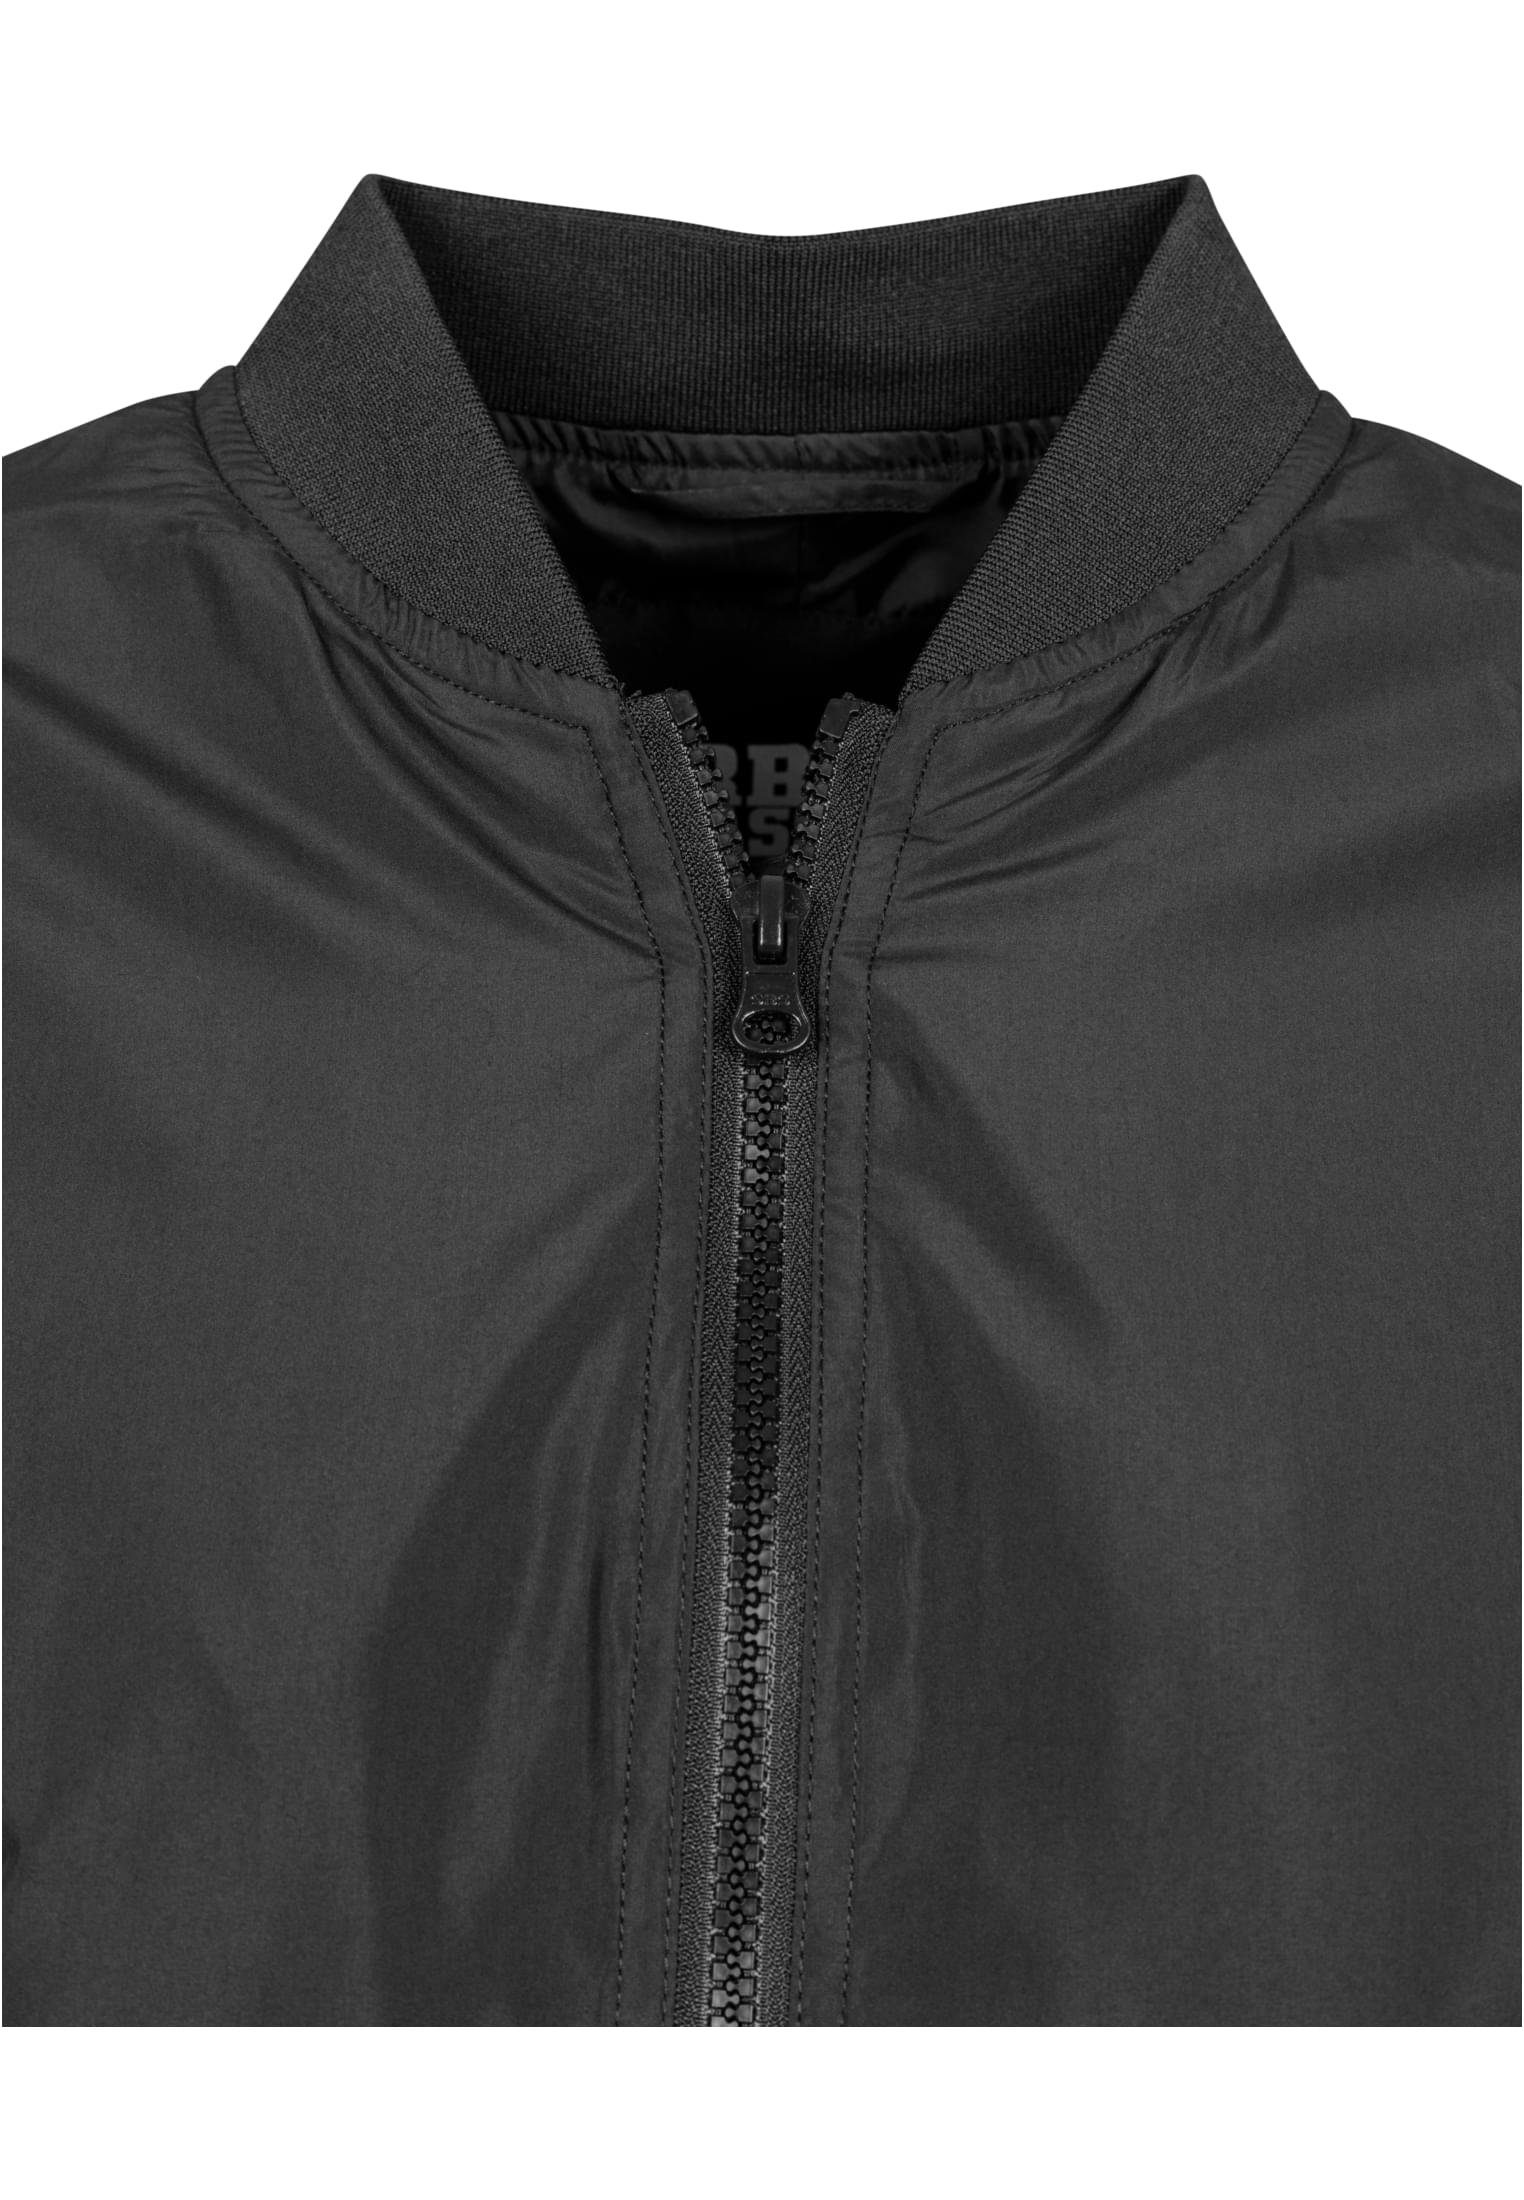 URBAN CLASSICS Outdoorjacke Damen Ladies Light black Jacket Bomber (1-St)